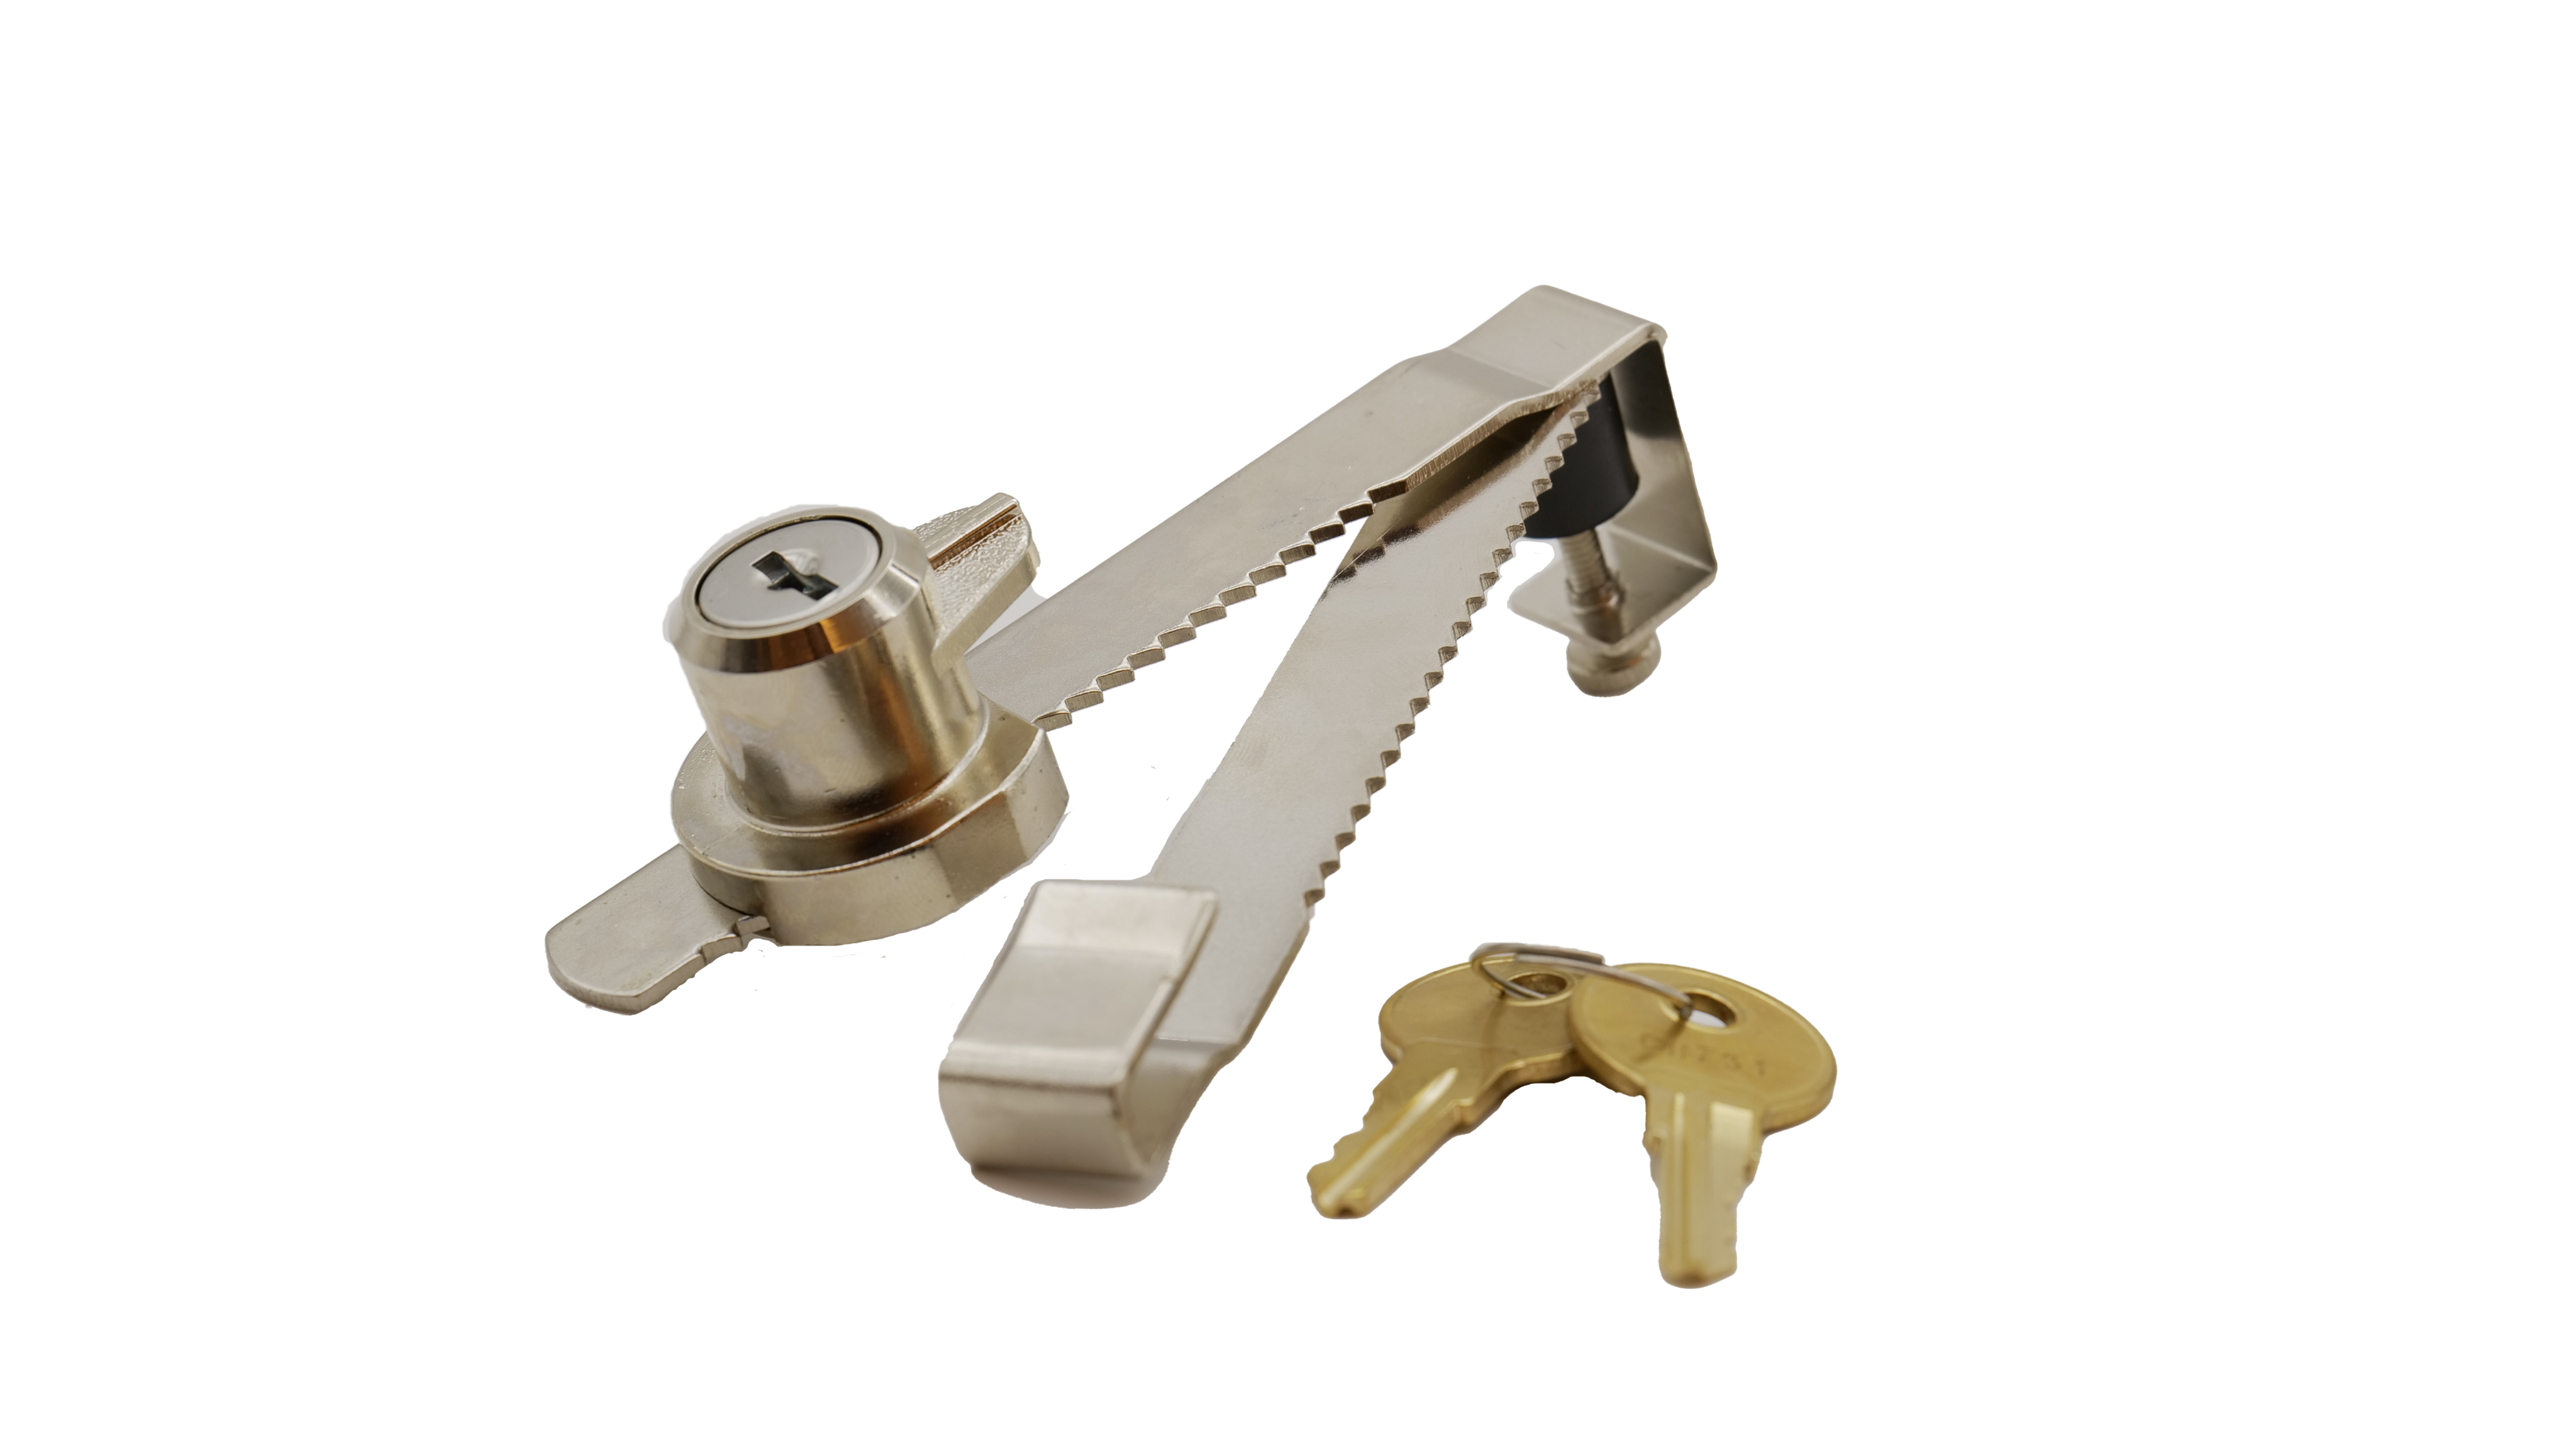 Buying skills of the anti-theft door lock cylinder